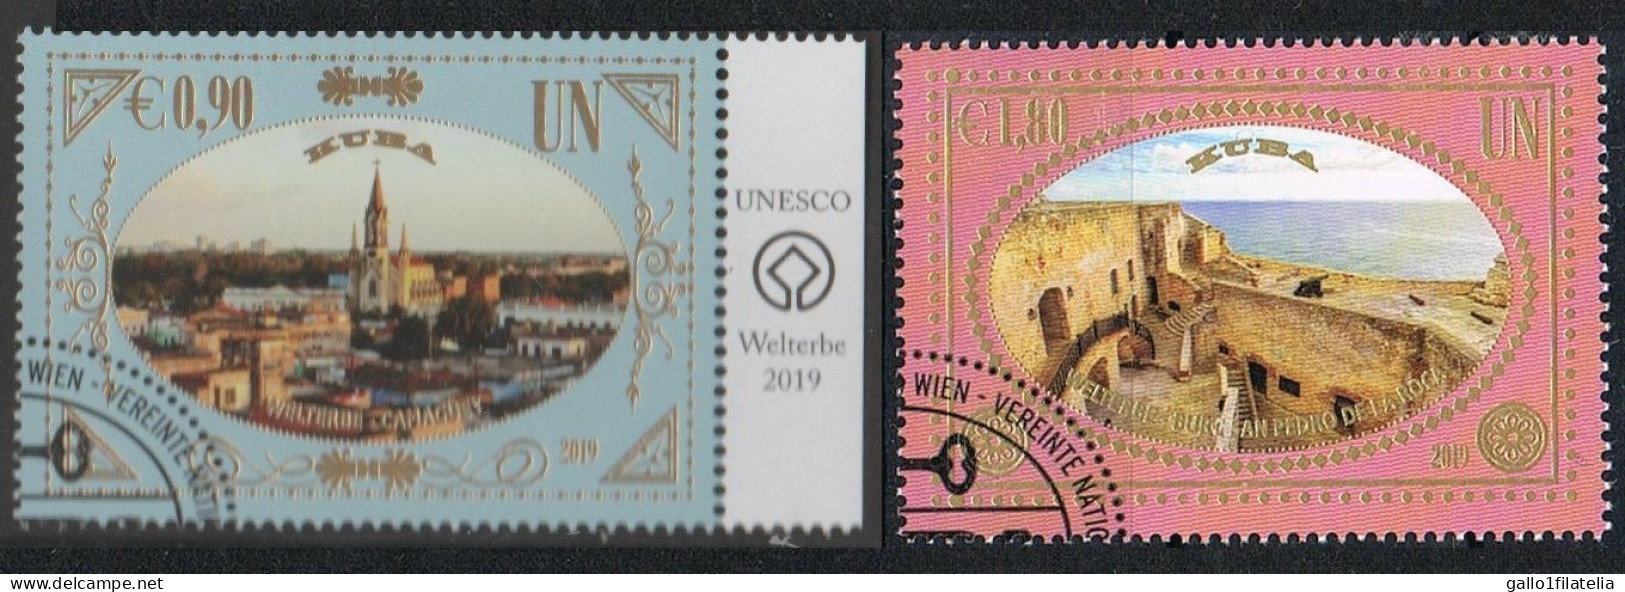 2019 - O.N.U. / UNITED NATIONS - VIENNA / WIEN - CUBA - PATRIMONIO UNESCO / UNESCO WORLD HERITAGE. USATO - Oblitérés